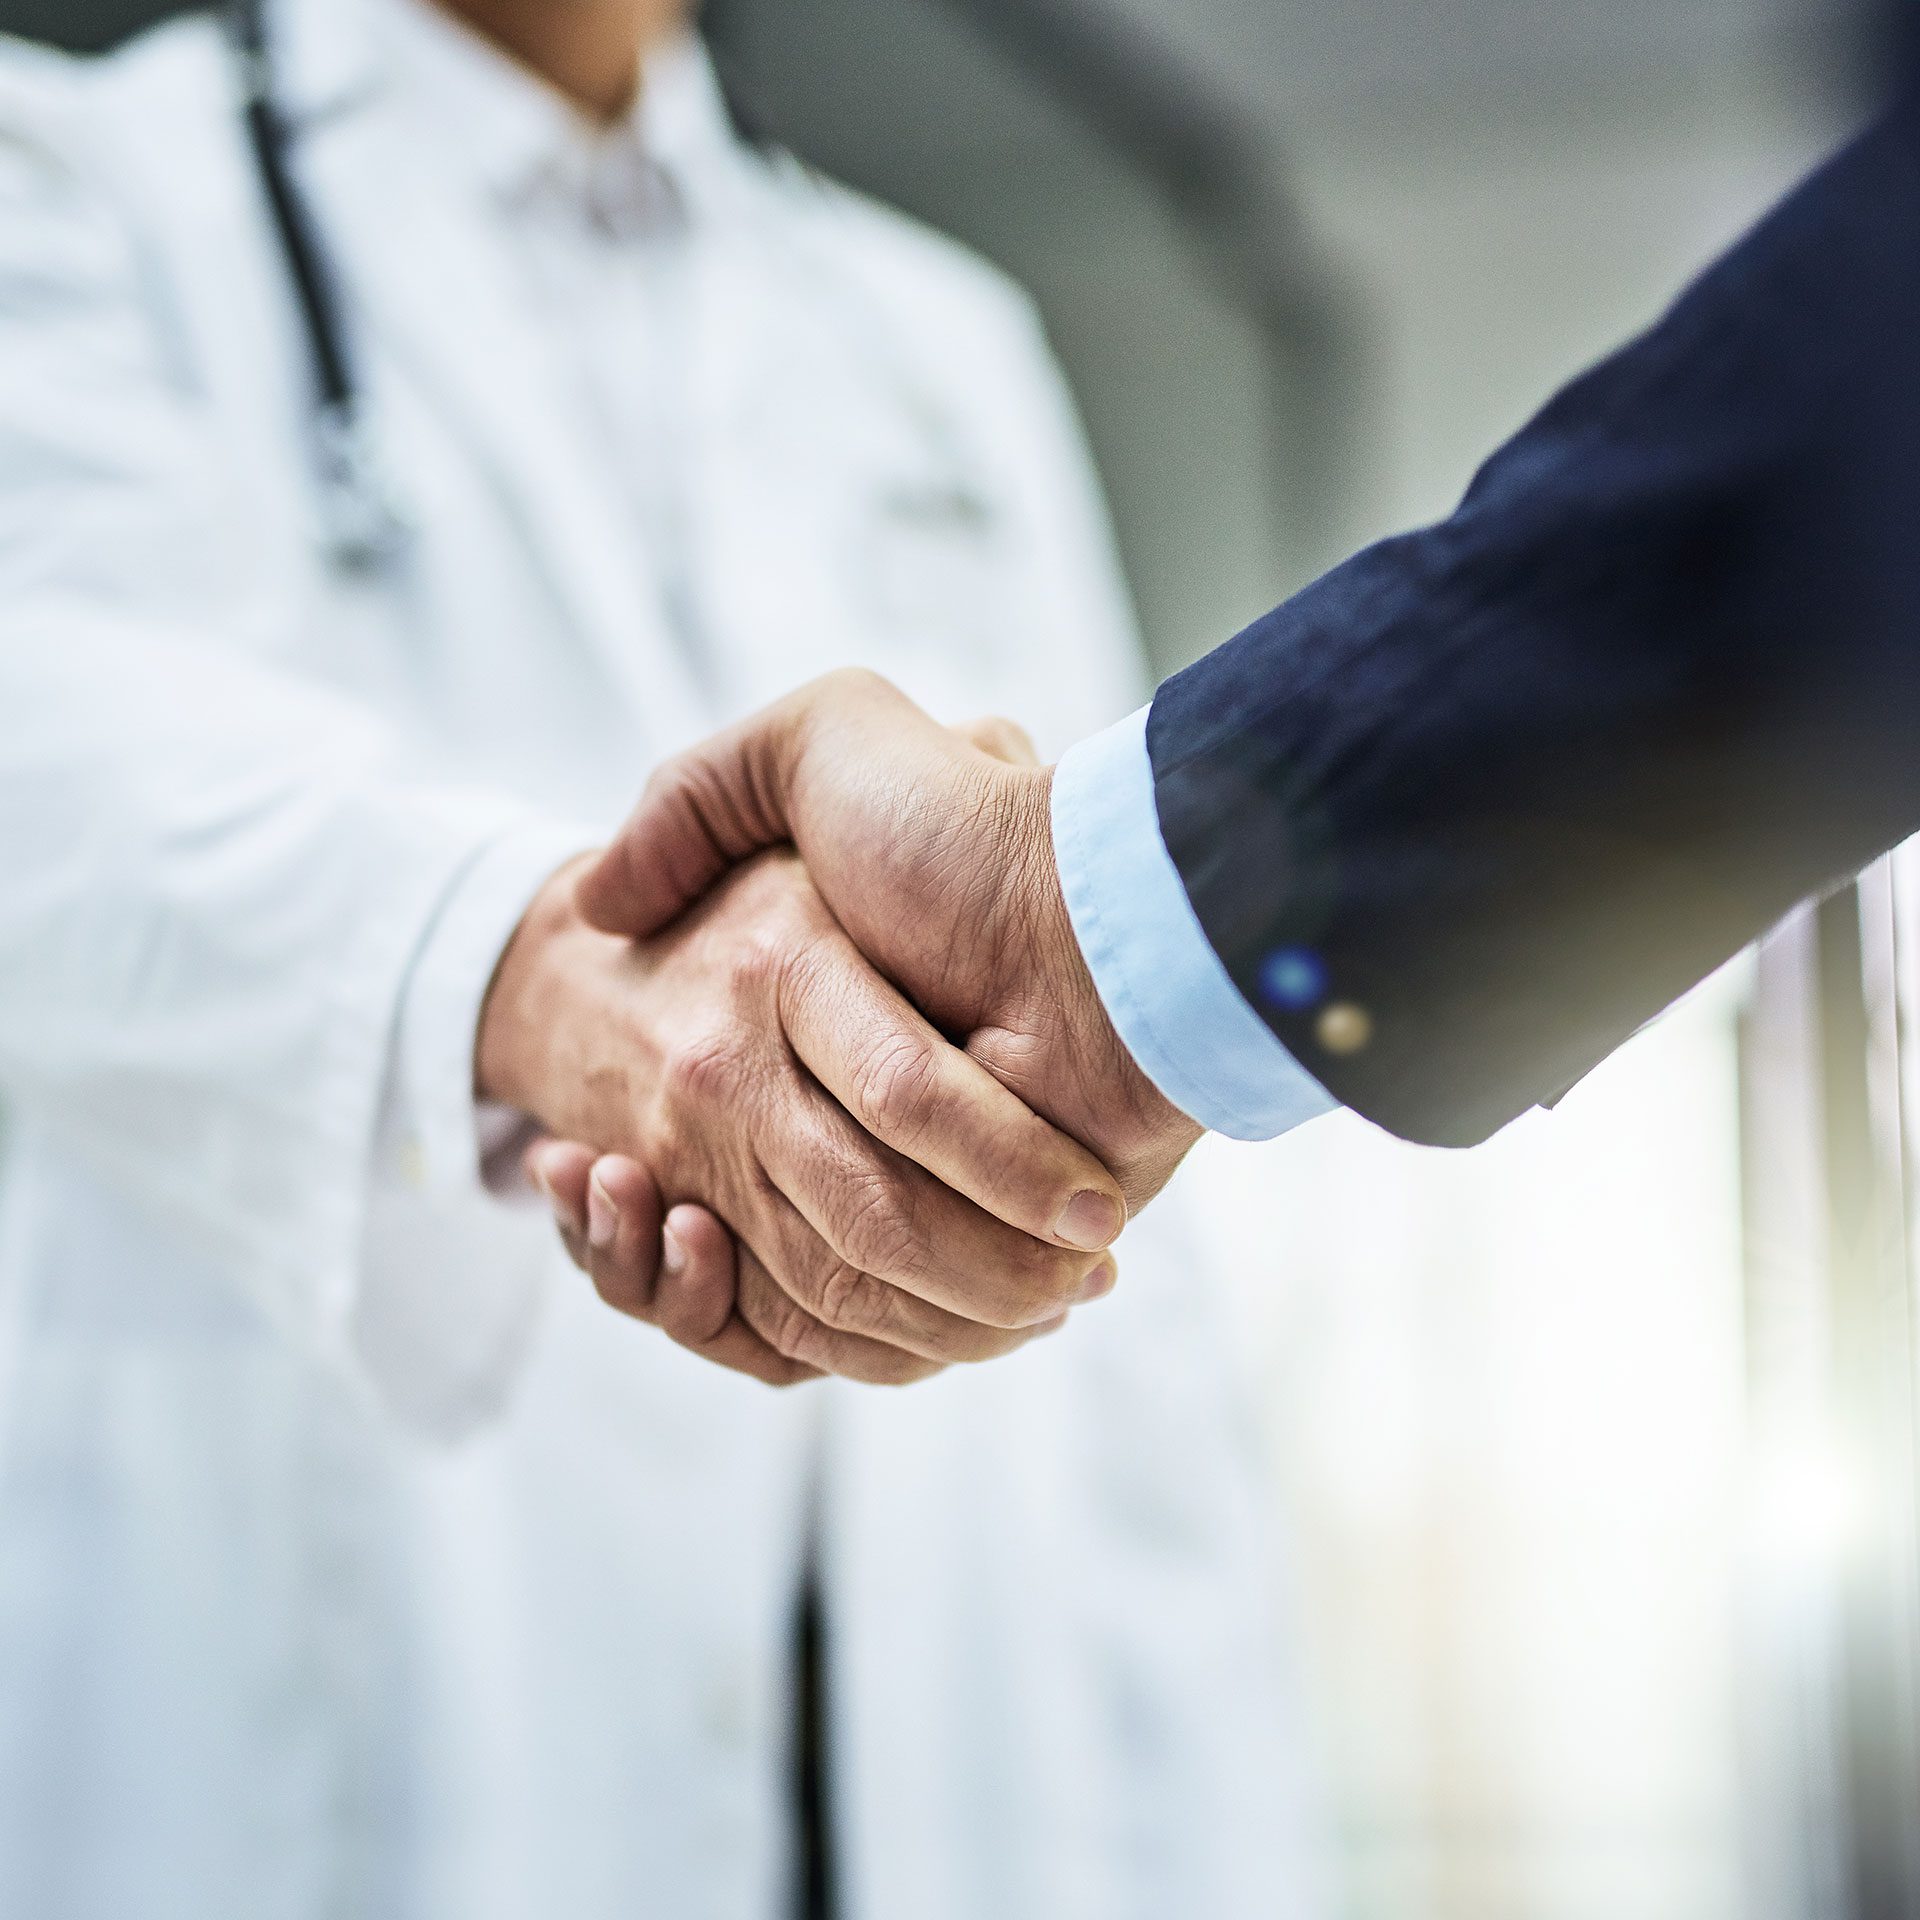 Doctor and customer handshake